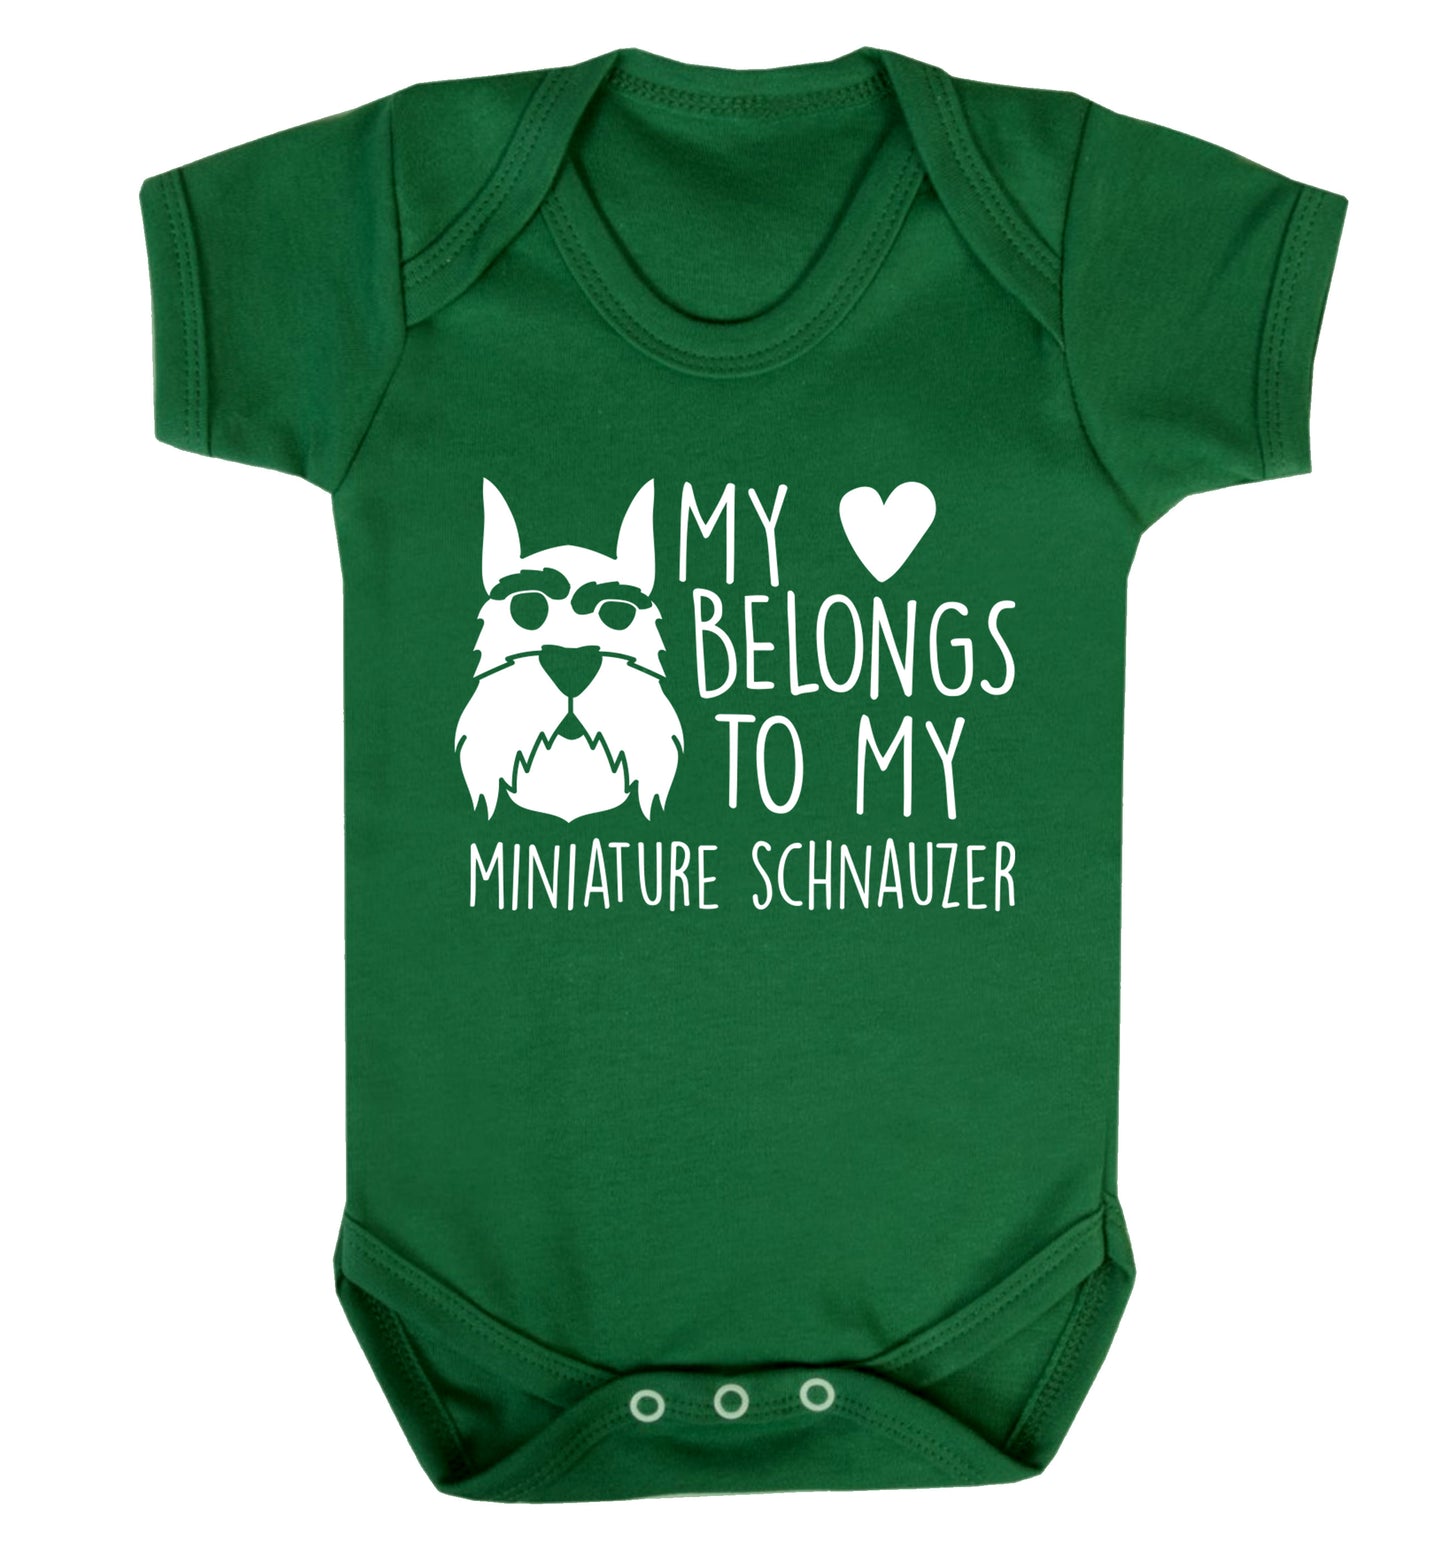 My heart belongs to my miniature schnauzer Baby Vest green 18-24 months